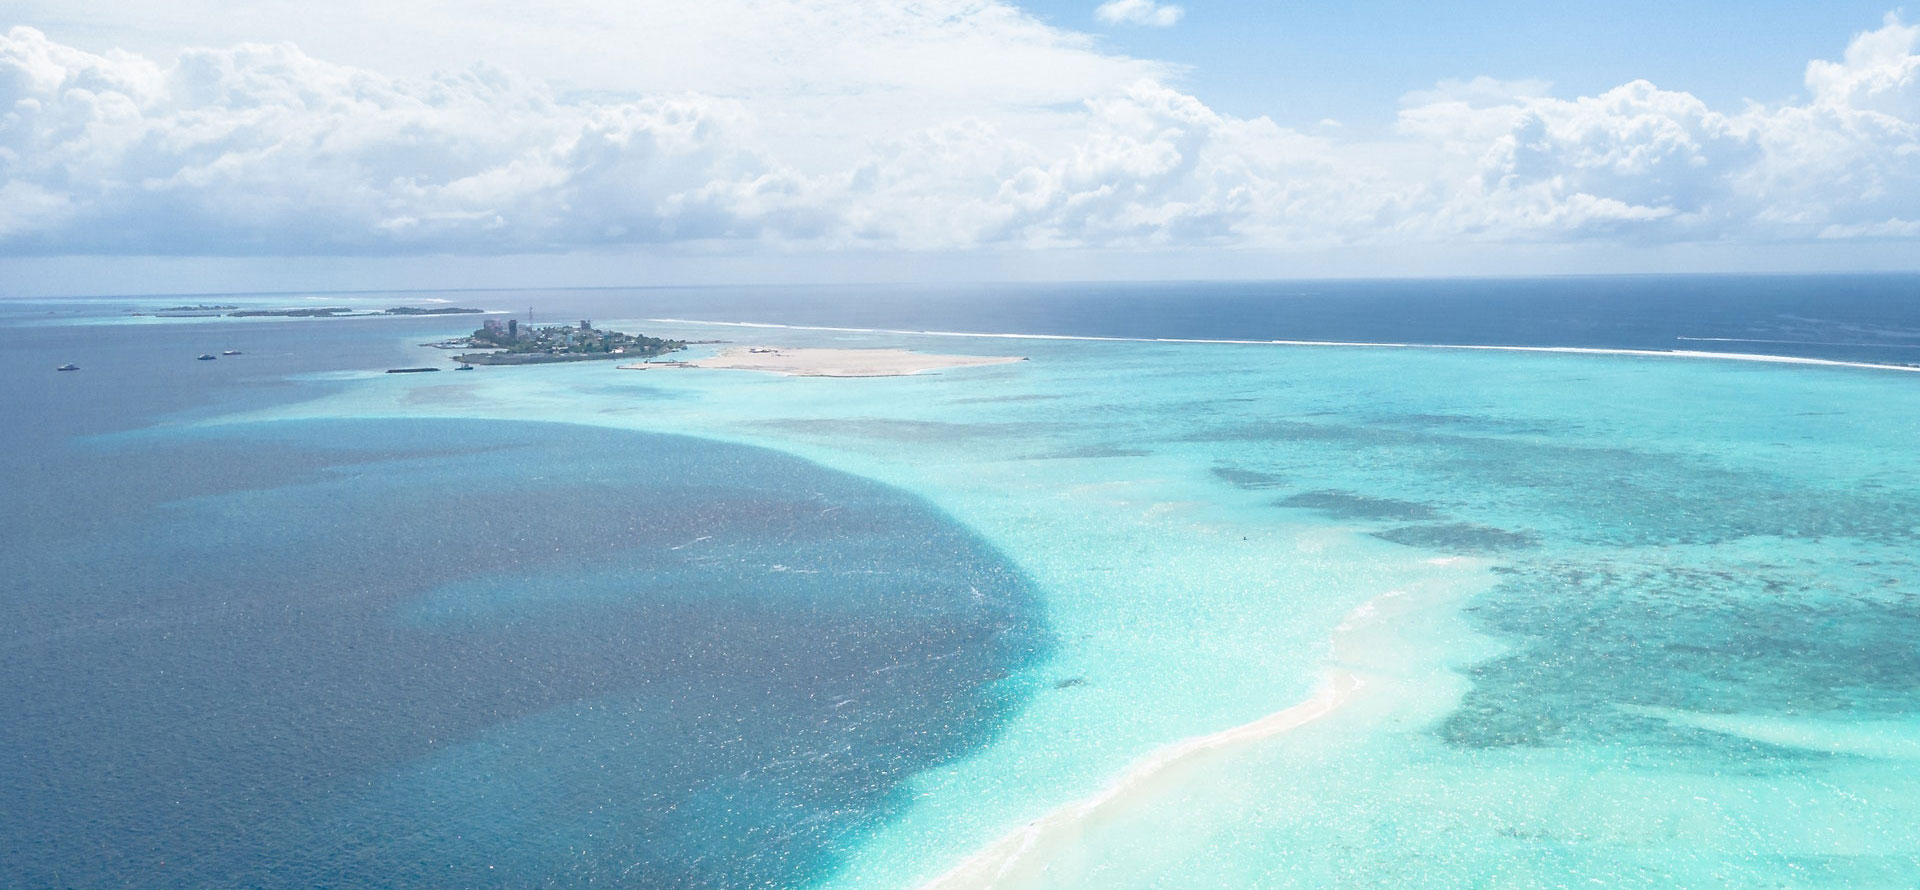 Landscape in Cayman Islands.